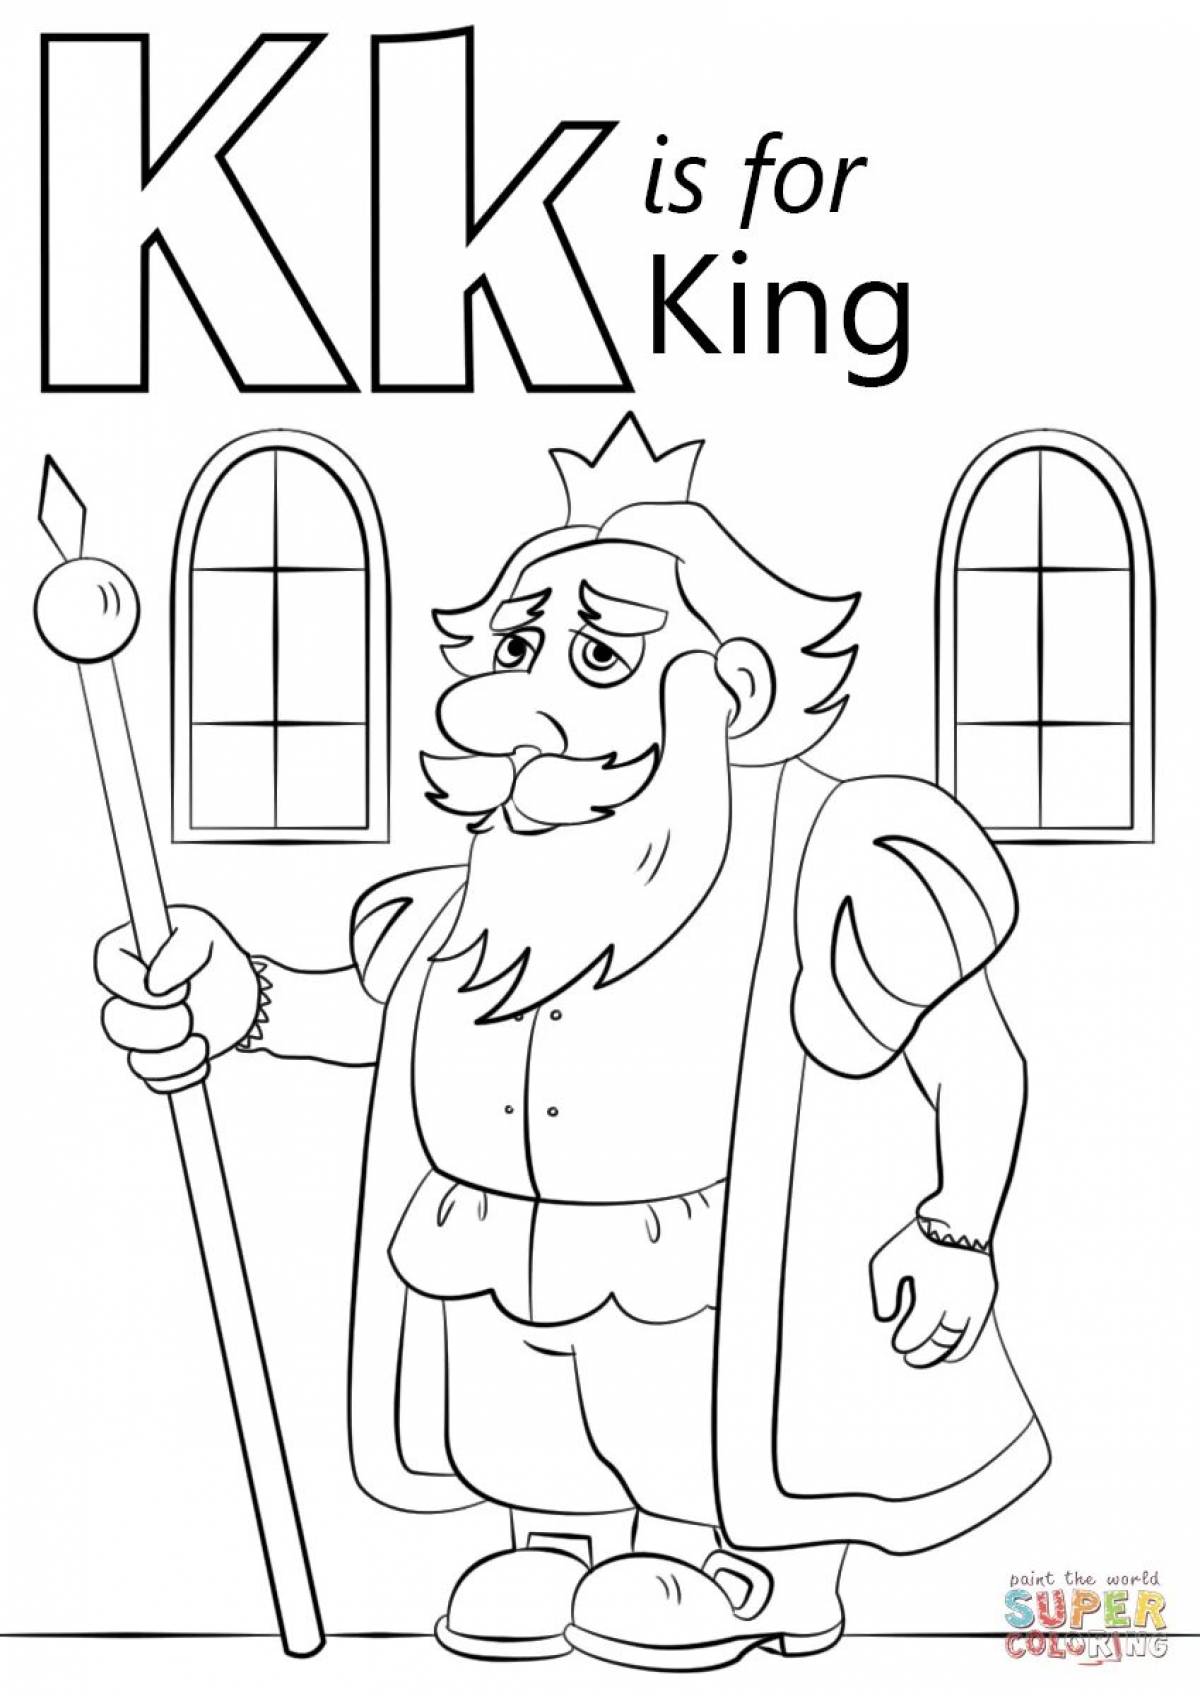 King for kids #4